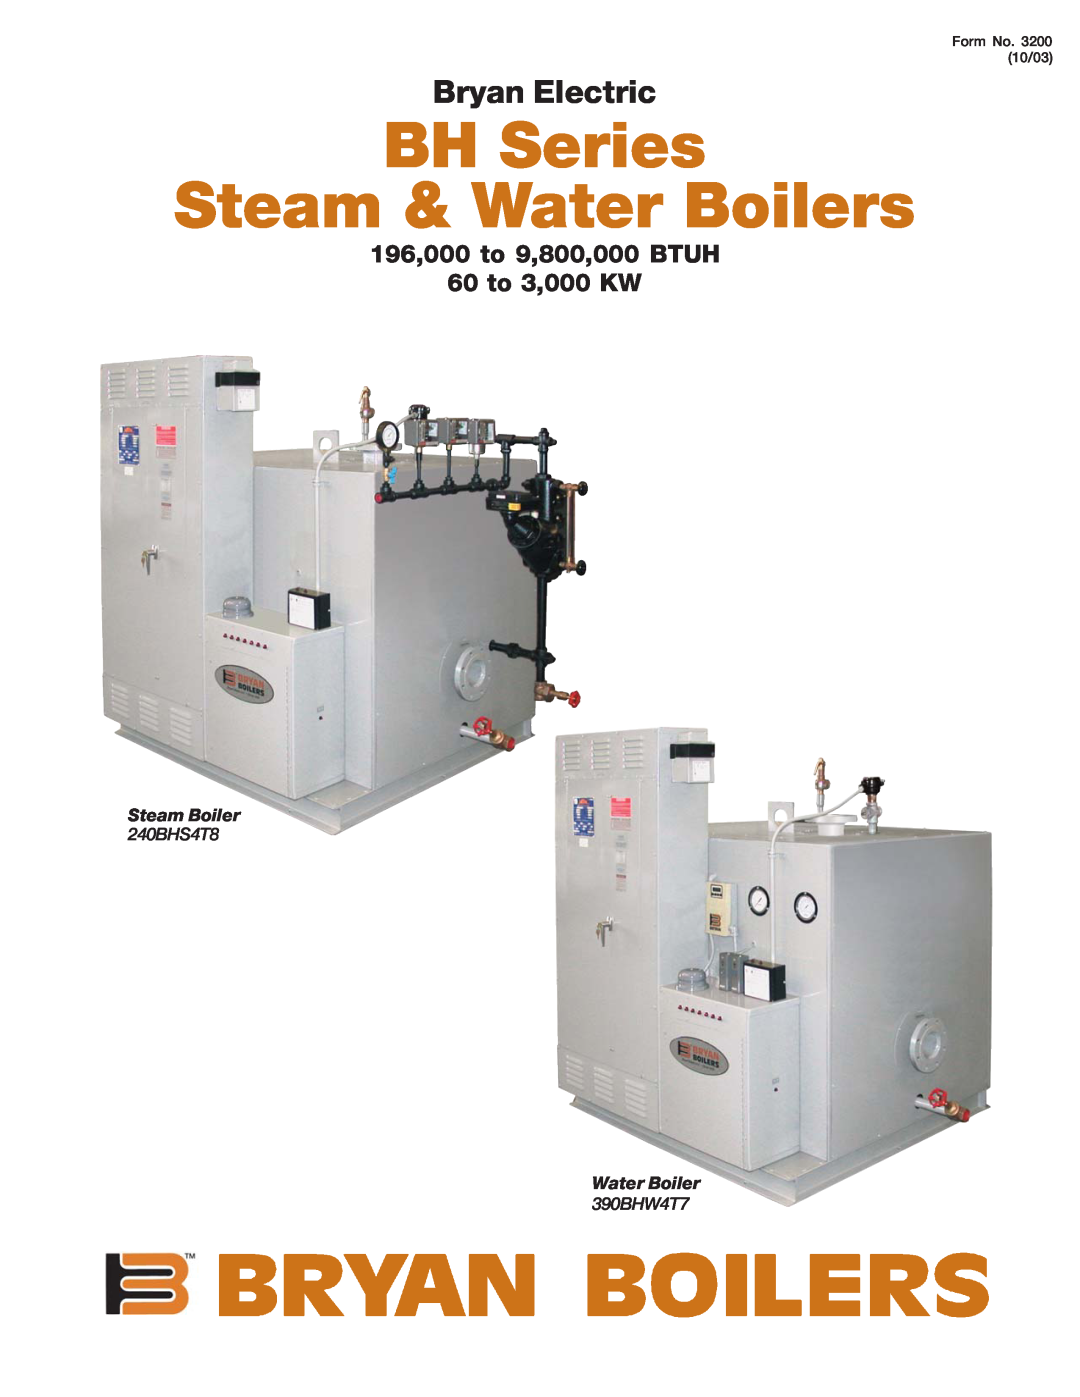 Bryan Boilers 240BHS4T8, 390BHW4T7 manual Steam Boiler, BH Series Steam & Water Boilers, Bryan Electric 